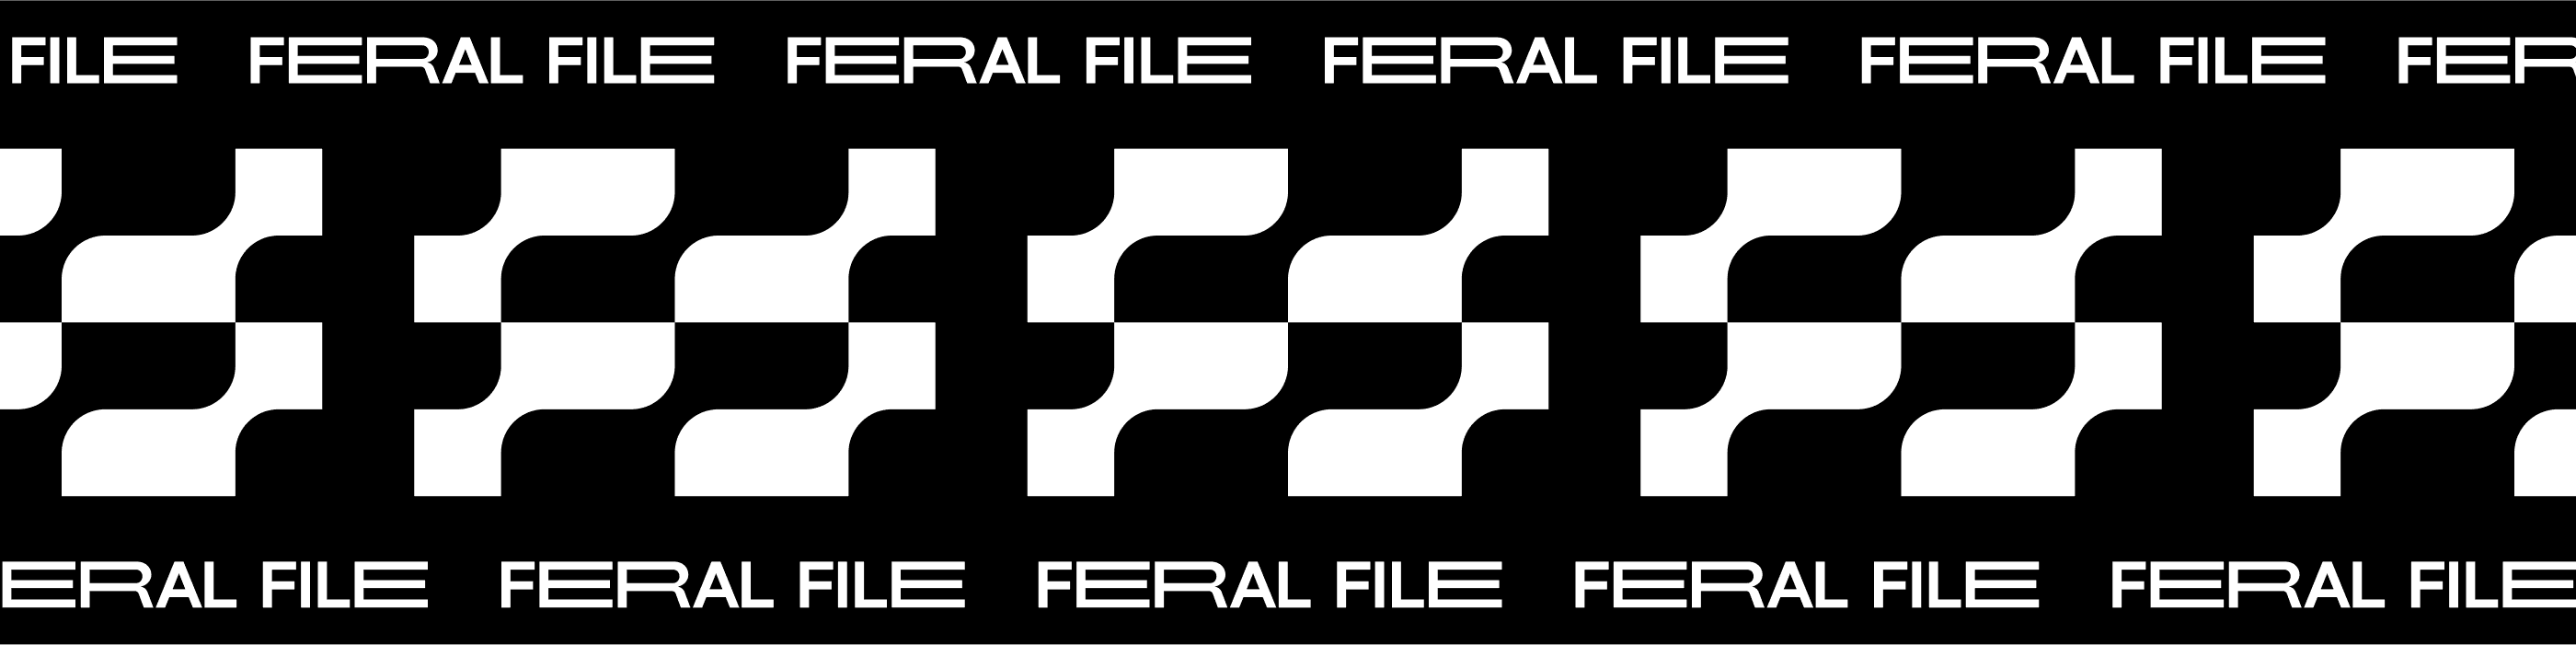 FeralFile 横幅